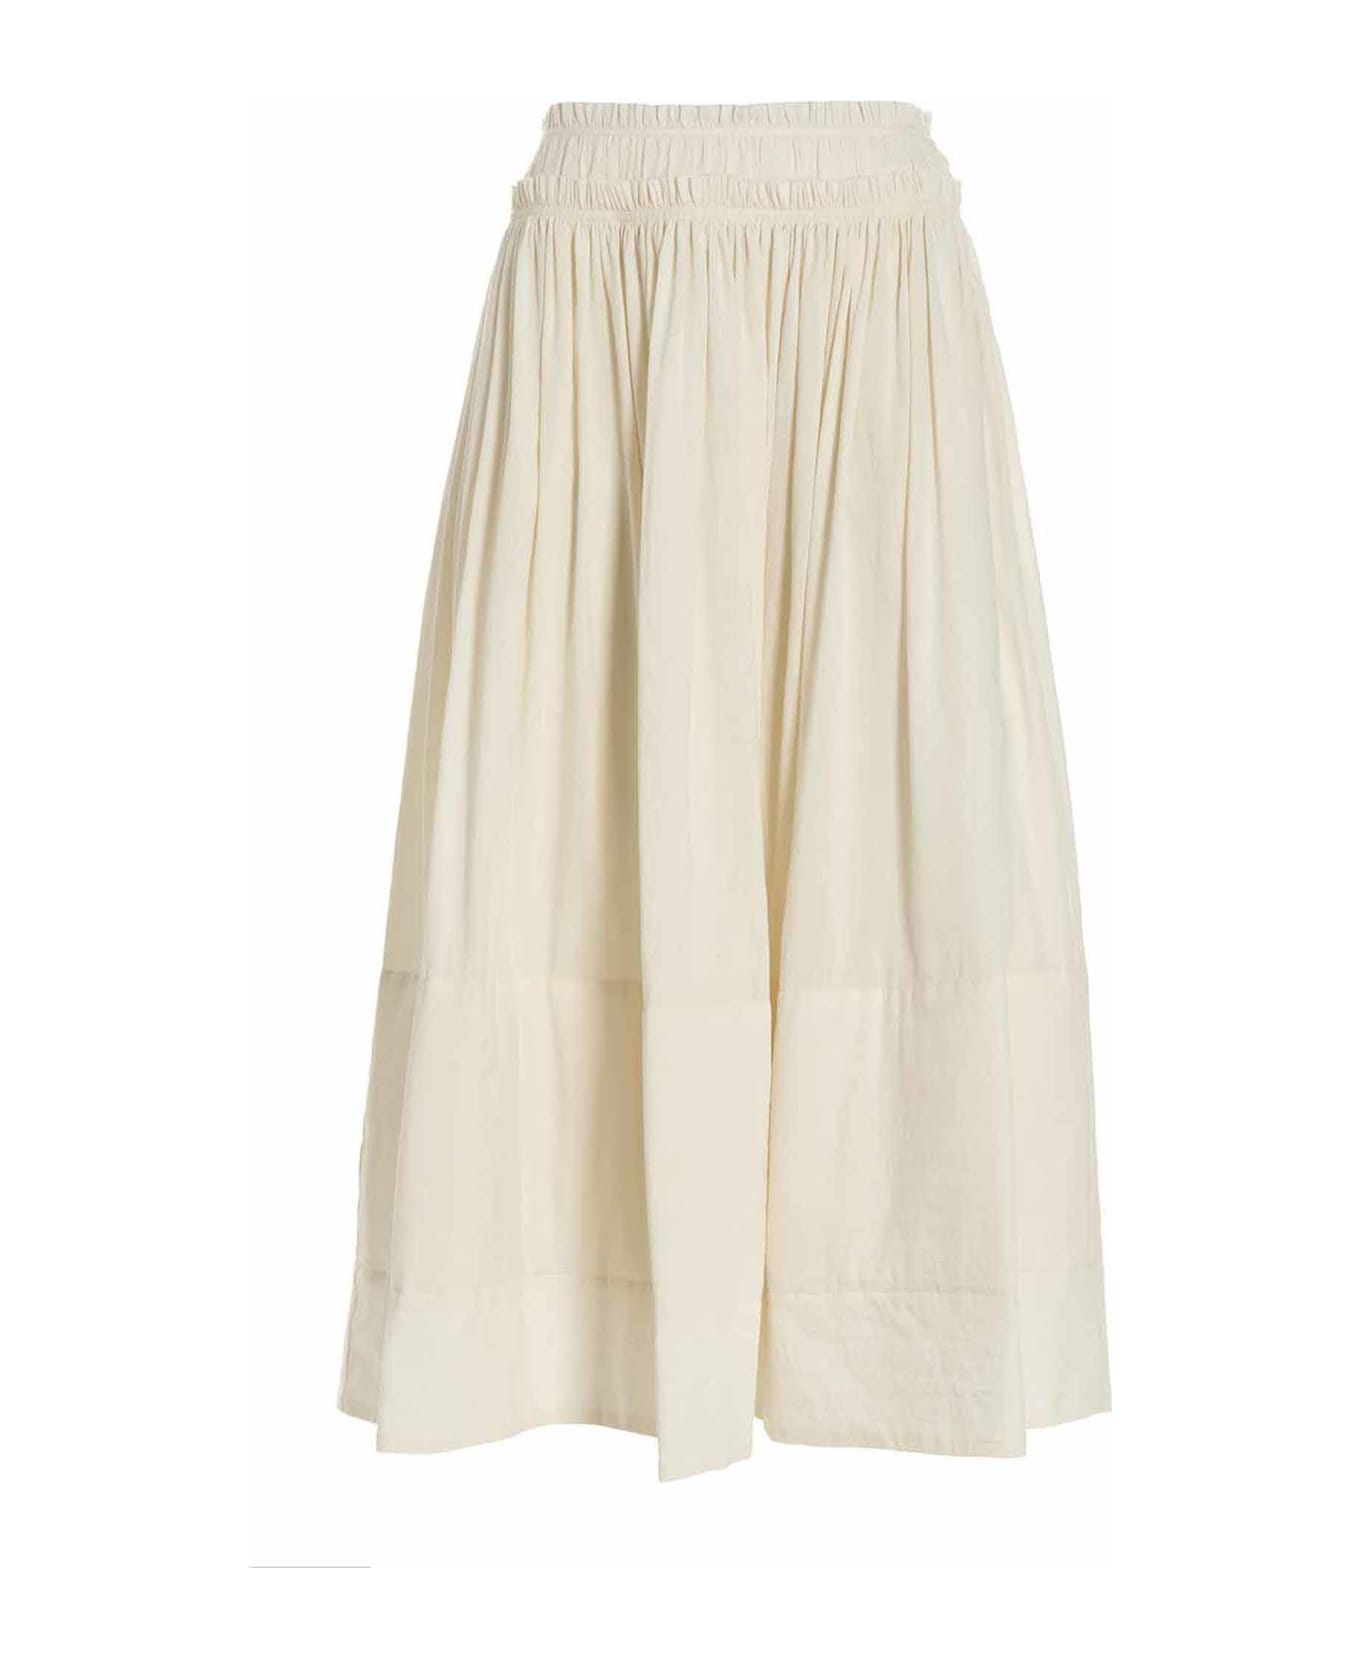 Tory Burch 'rouched Waist' Skirt - White スカート